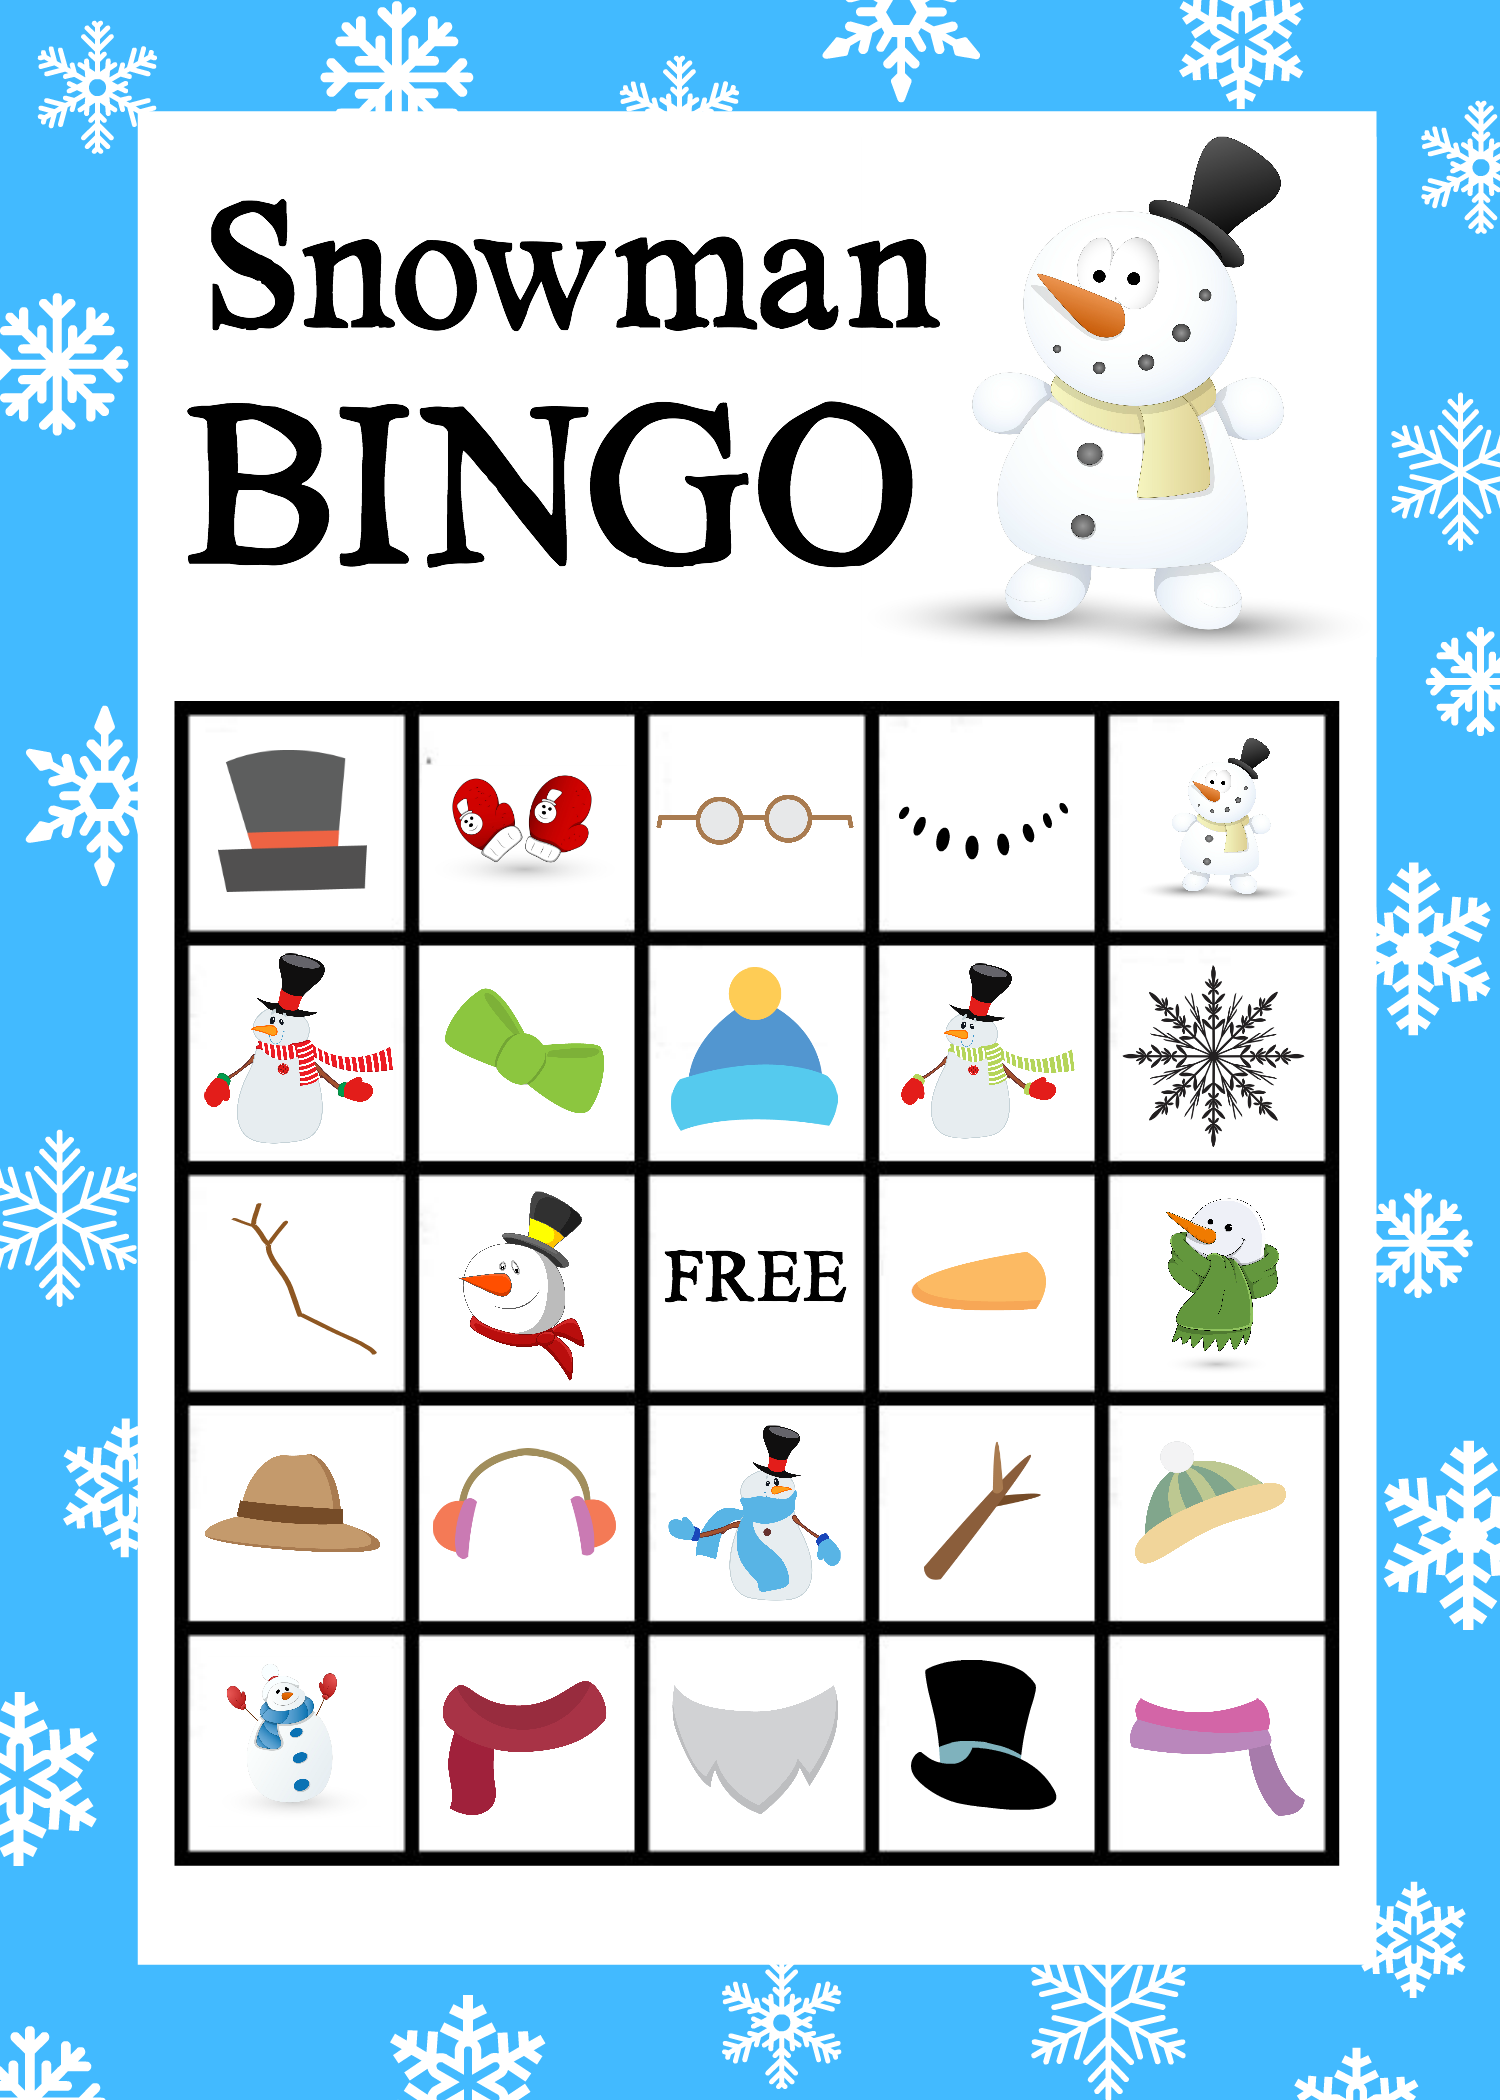 Printable Snowman Bingo Game Crazy Little Projects